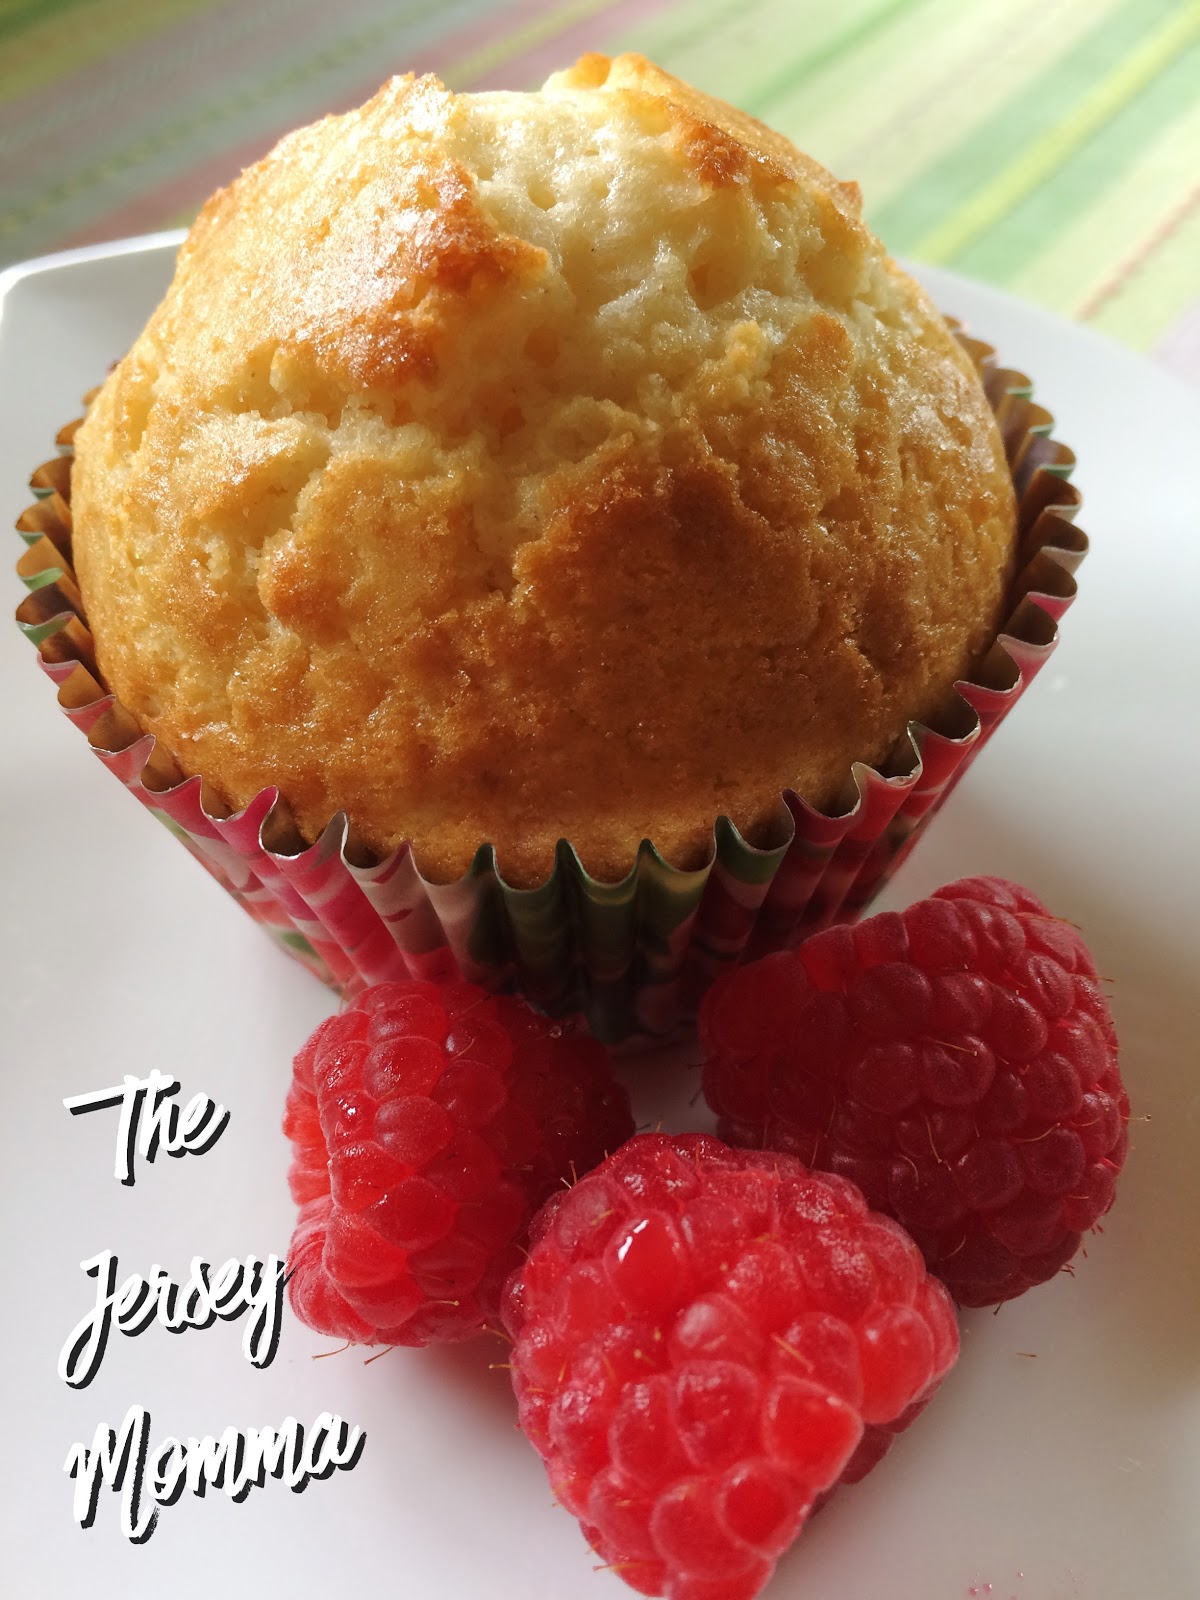 Simple Vanilla Muffins | The Jersey Momma